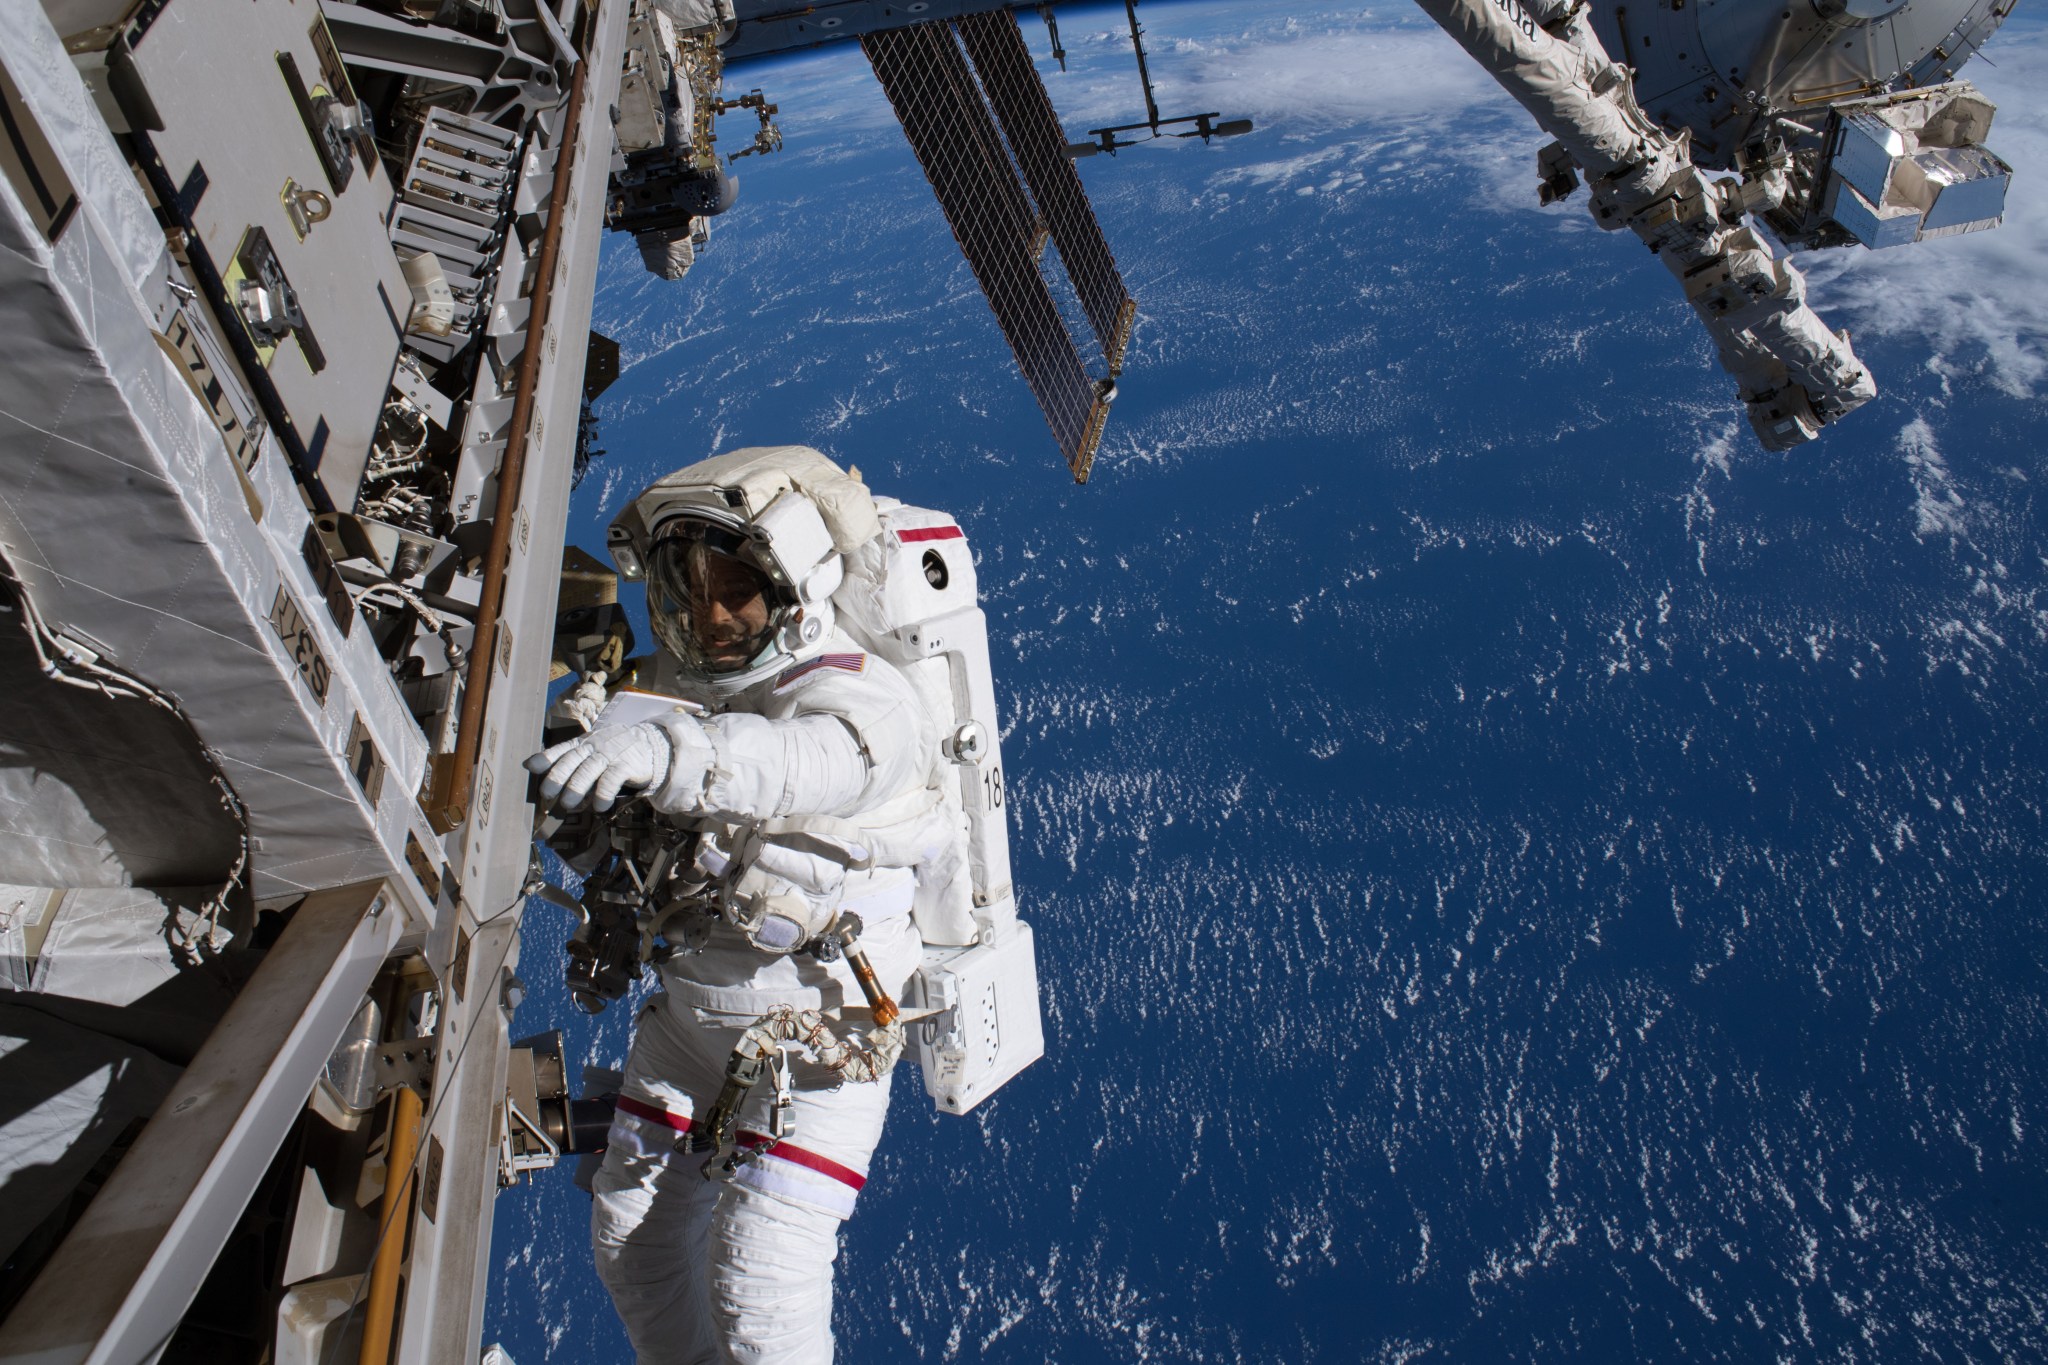 NASA Expedition 56 astronaut Ricky Arnold